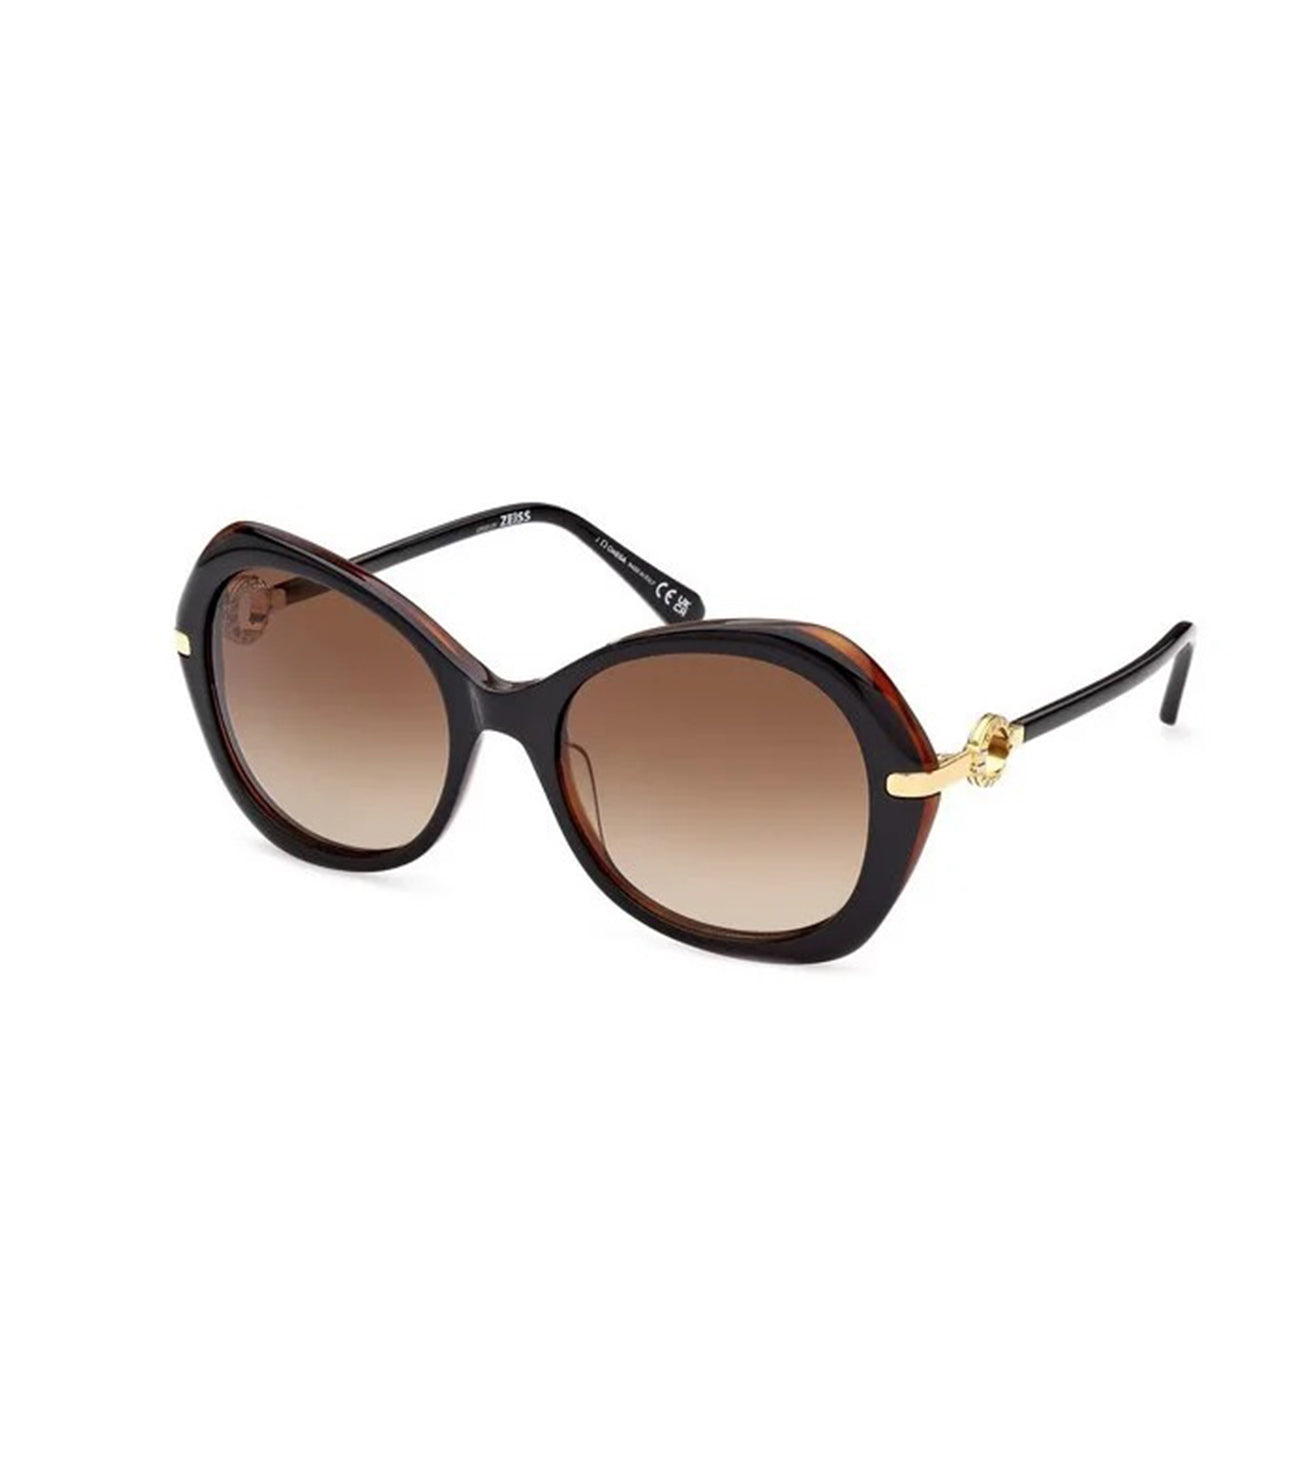 Omega Women's Grad Brown Butterfly Sunglasses